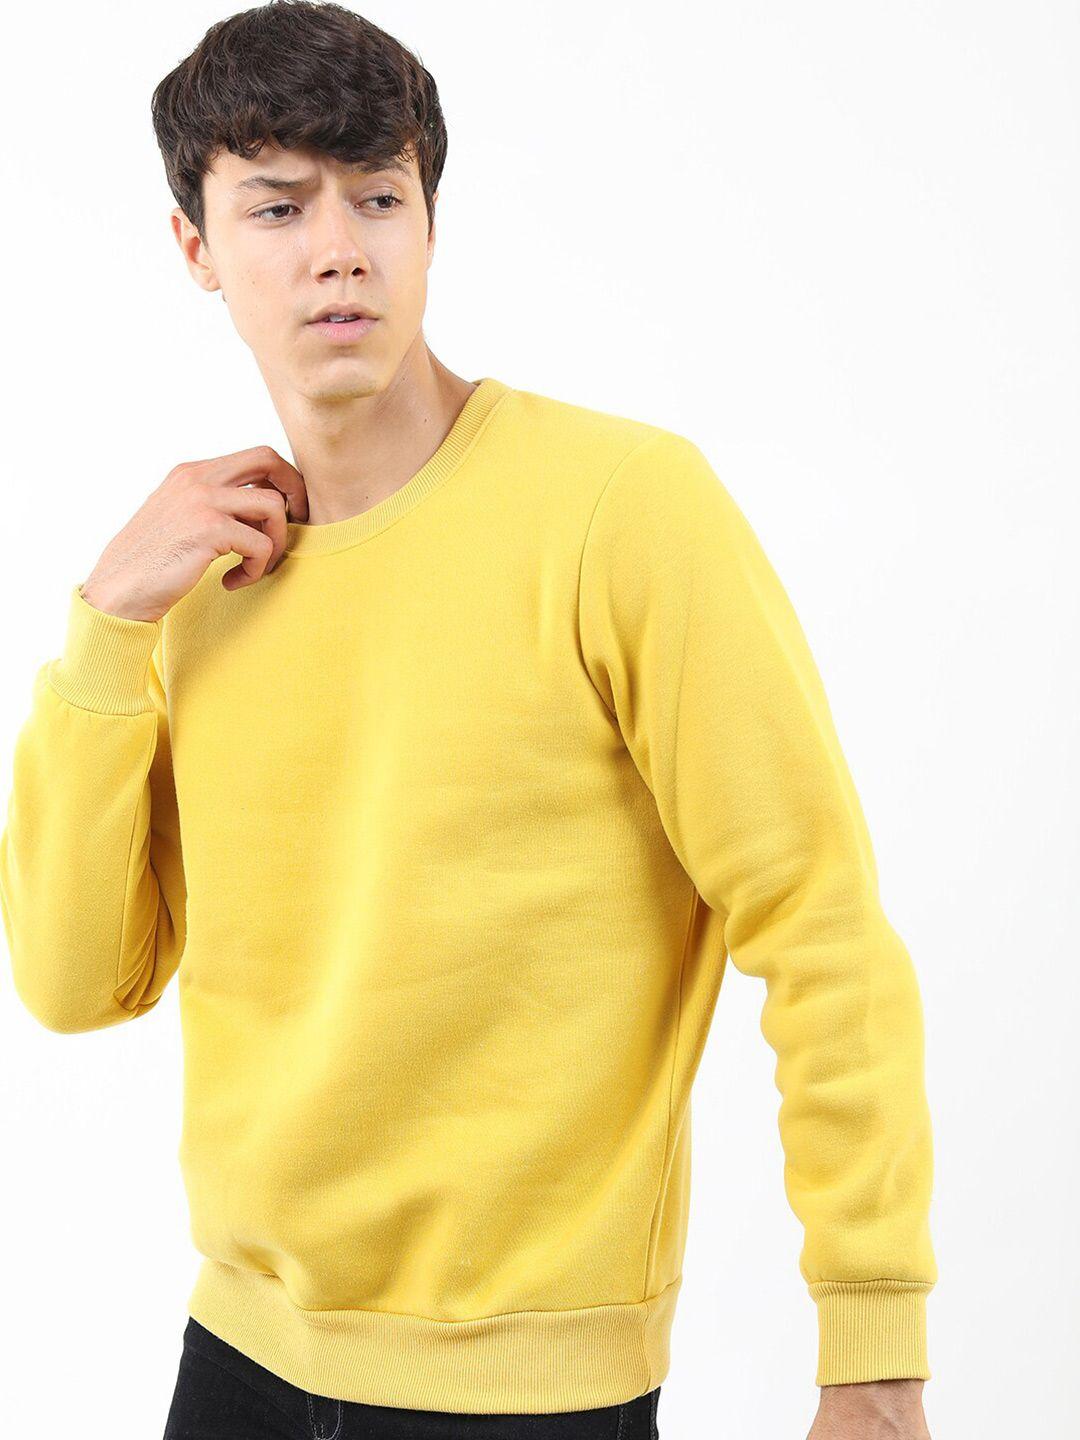 ketch-yellow-round-neck-long-sleeves-sweatshirt